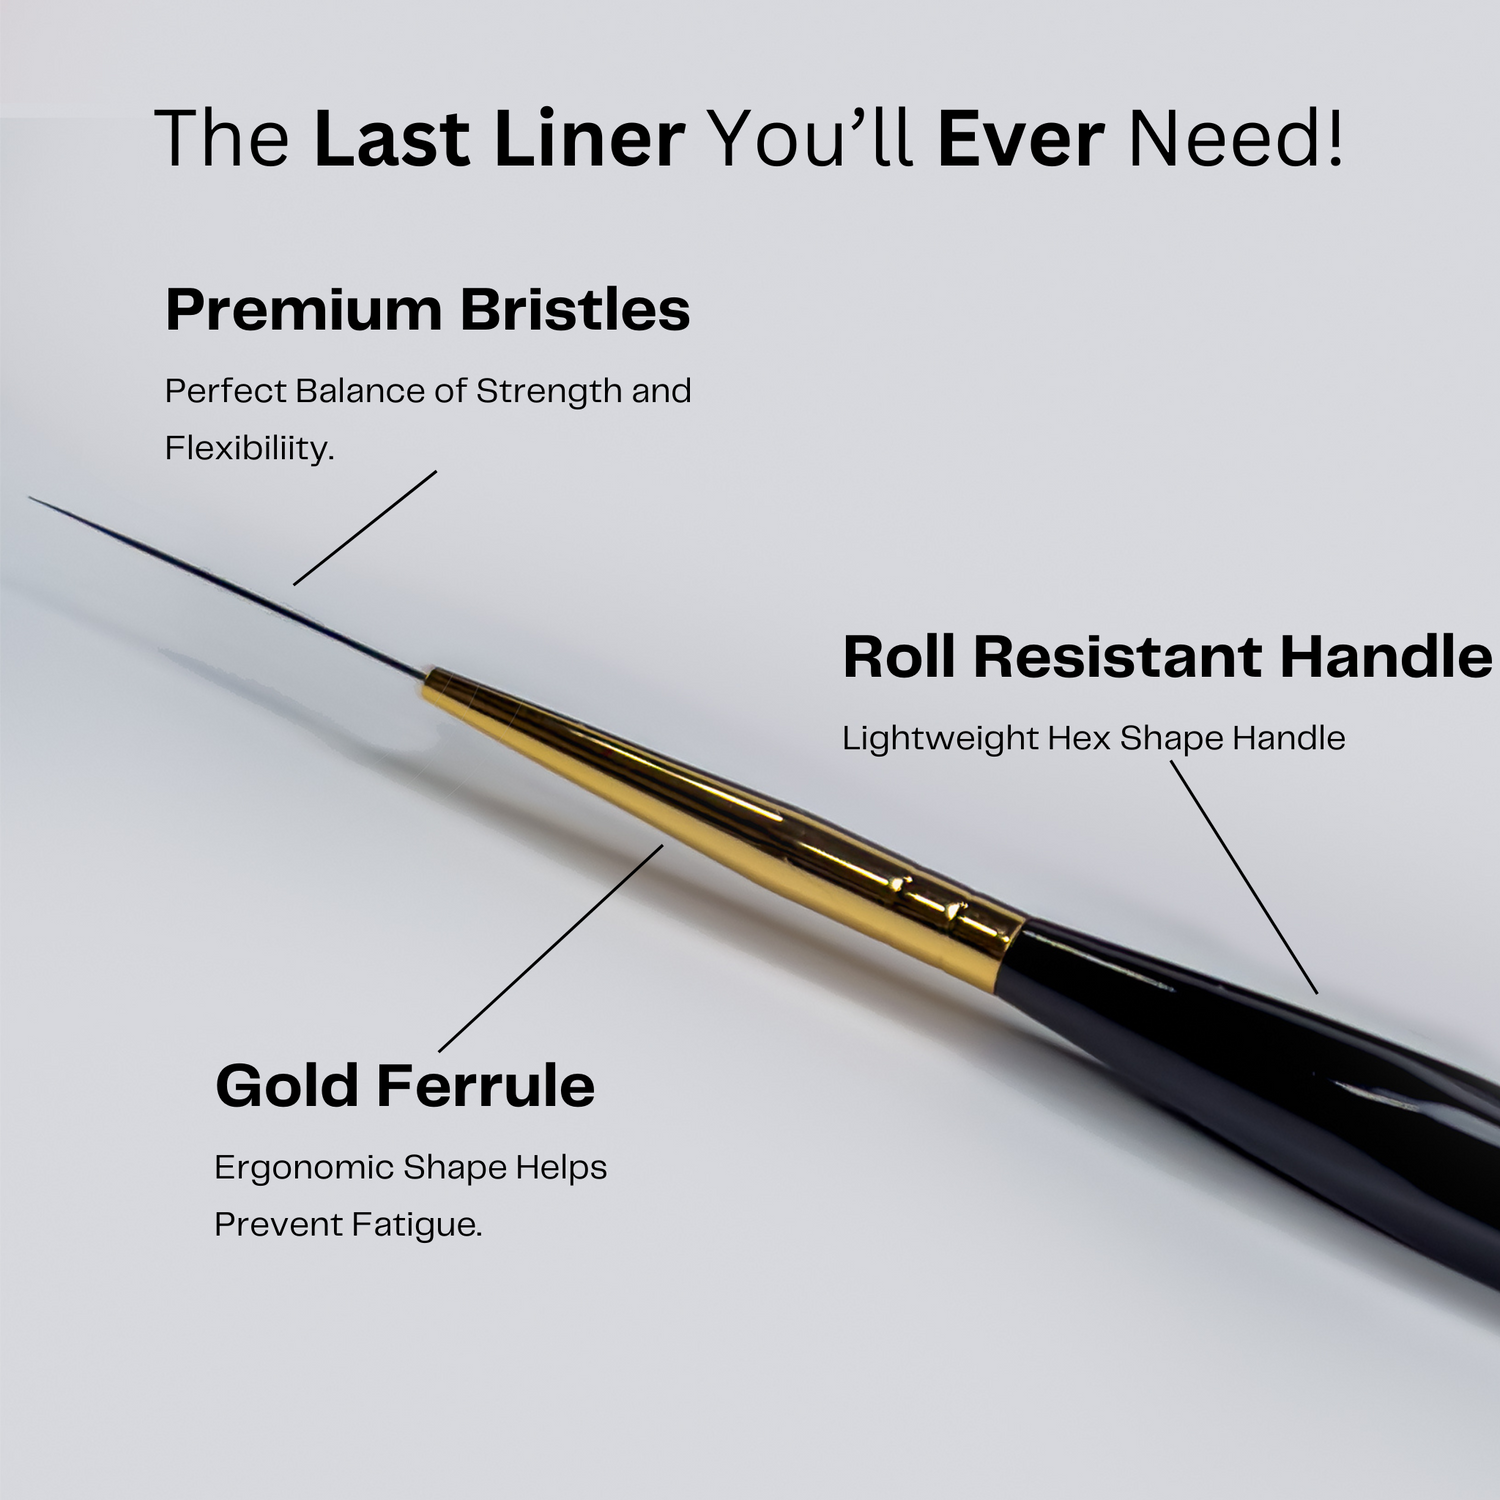 Essentials Nail Art Brush Set